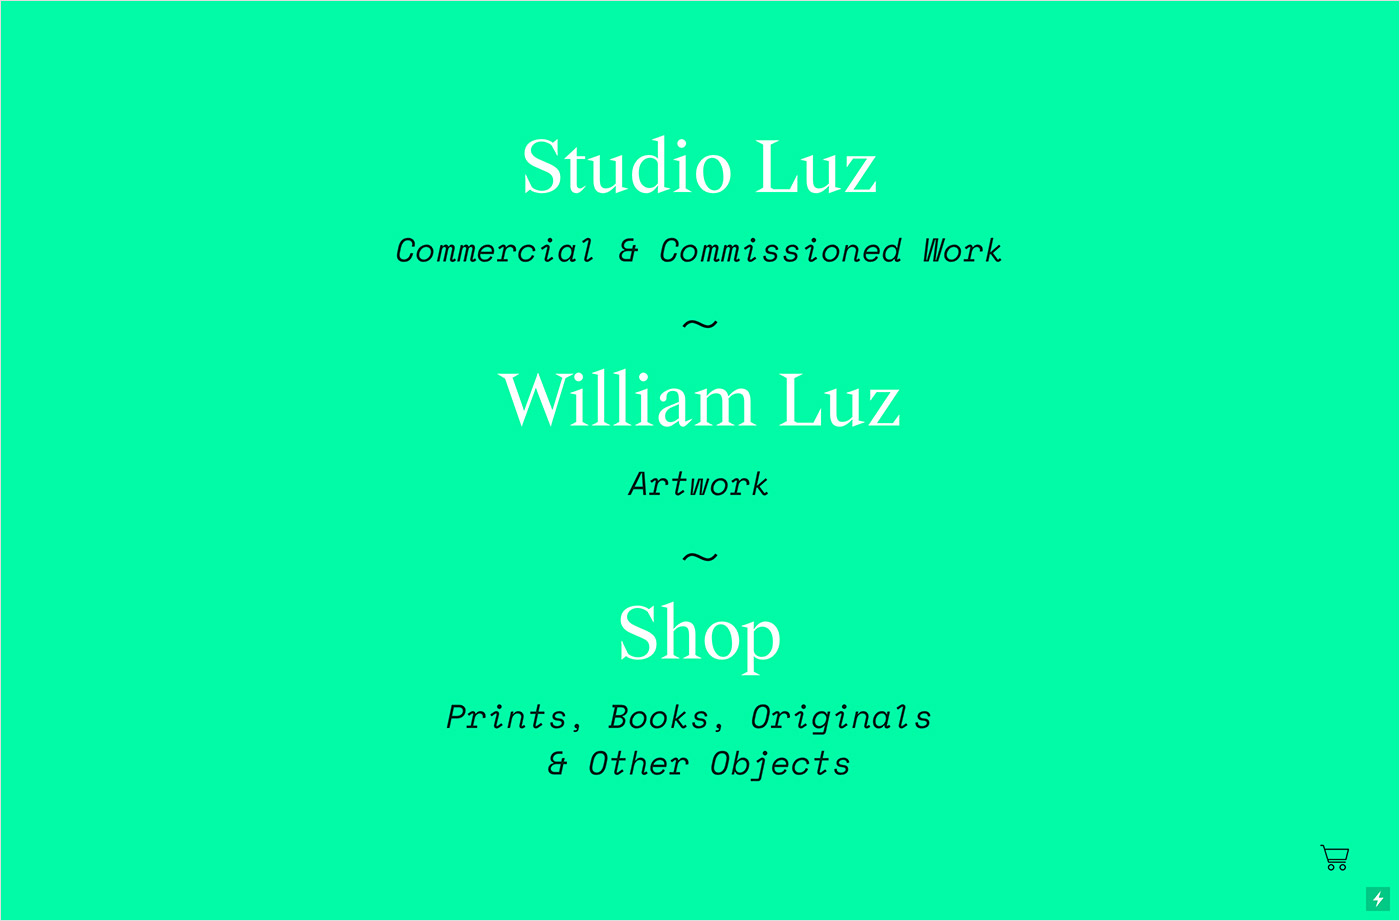 William Luzウェブサイトの画面キャプチャ画像